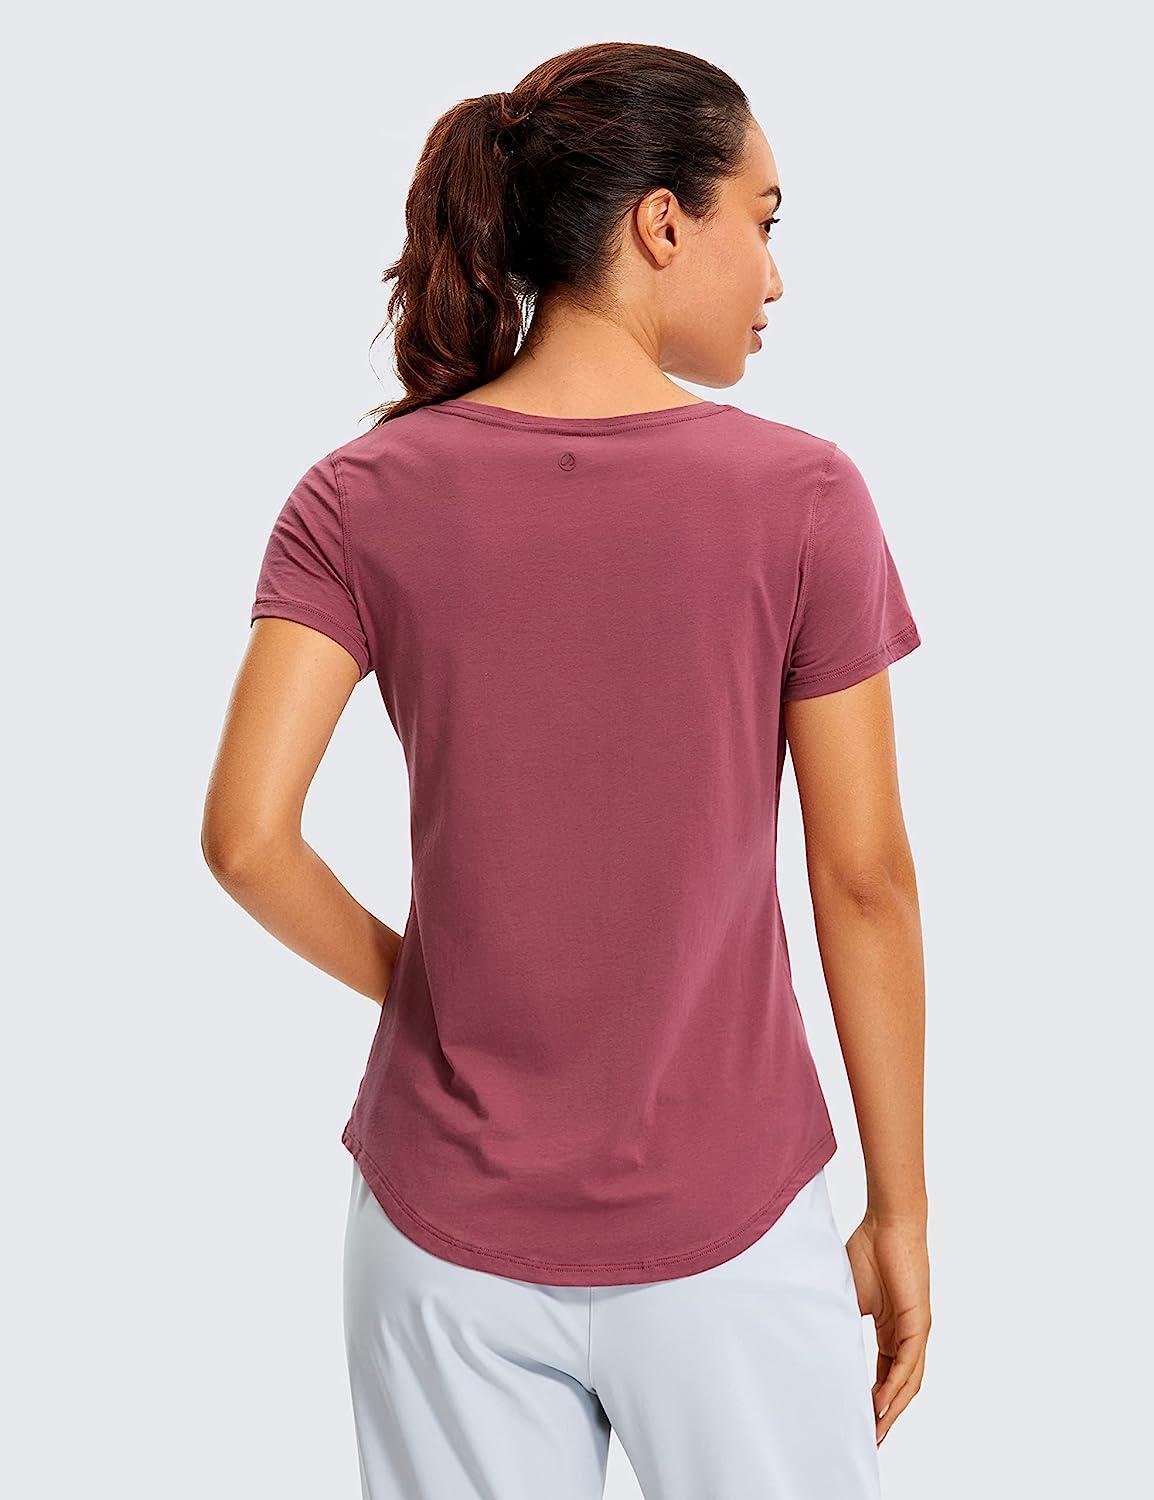 CRZ YOGA Women's Shirts Loose Fit Gym Workout T-Shirt, Large (N001